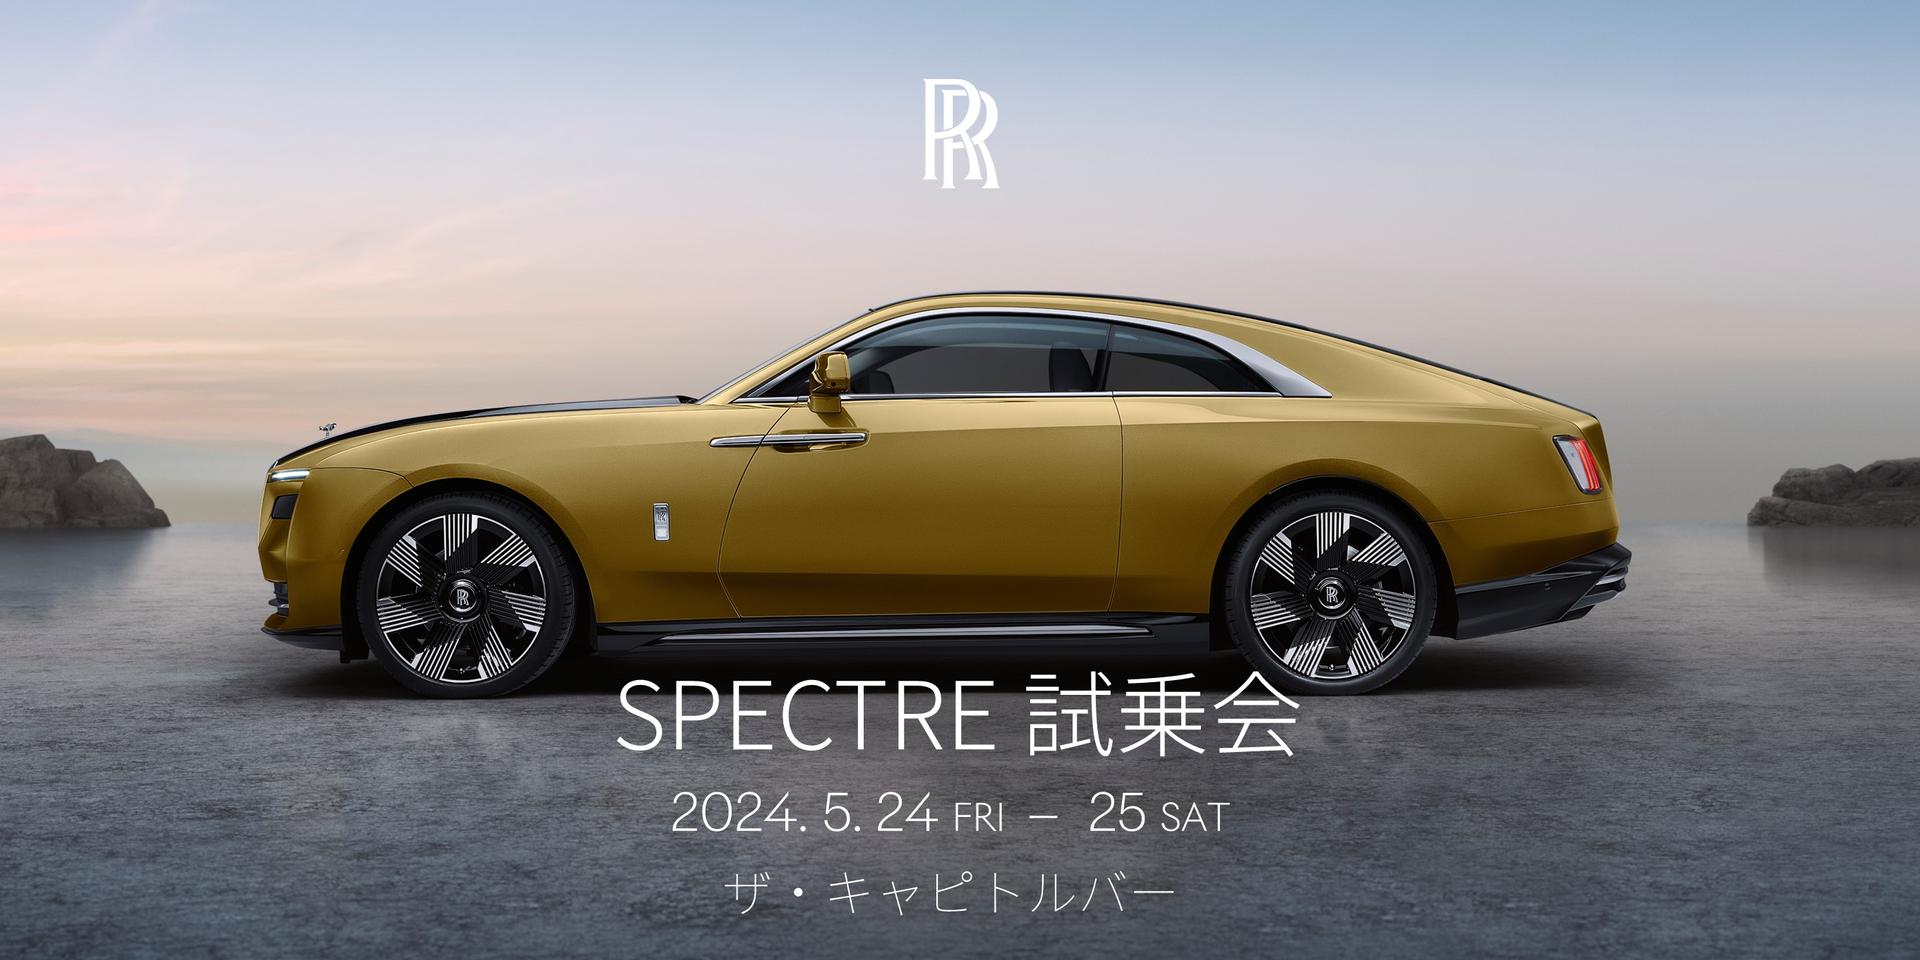 【SPECTRE 試乗会】<br>
ロールス・ロイス・モーター・カーズ 東京